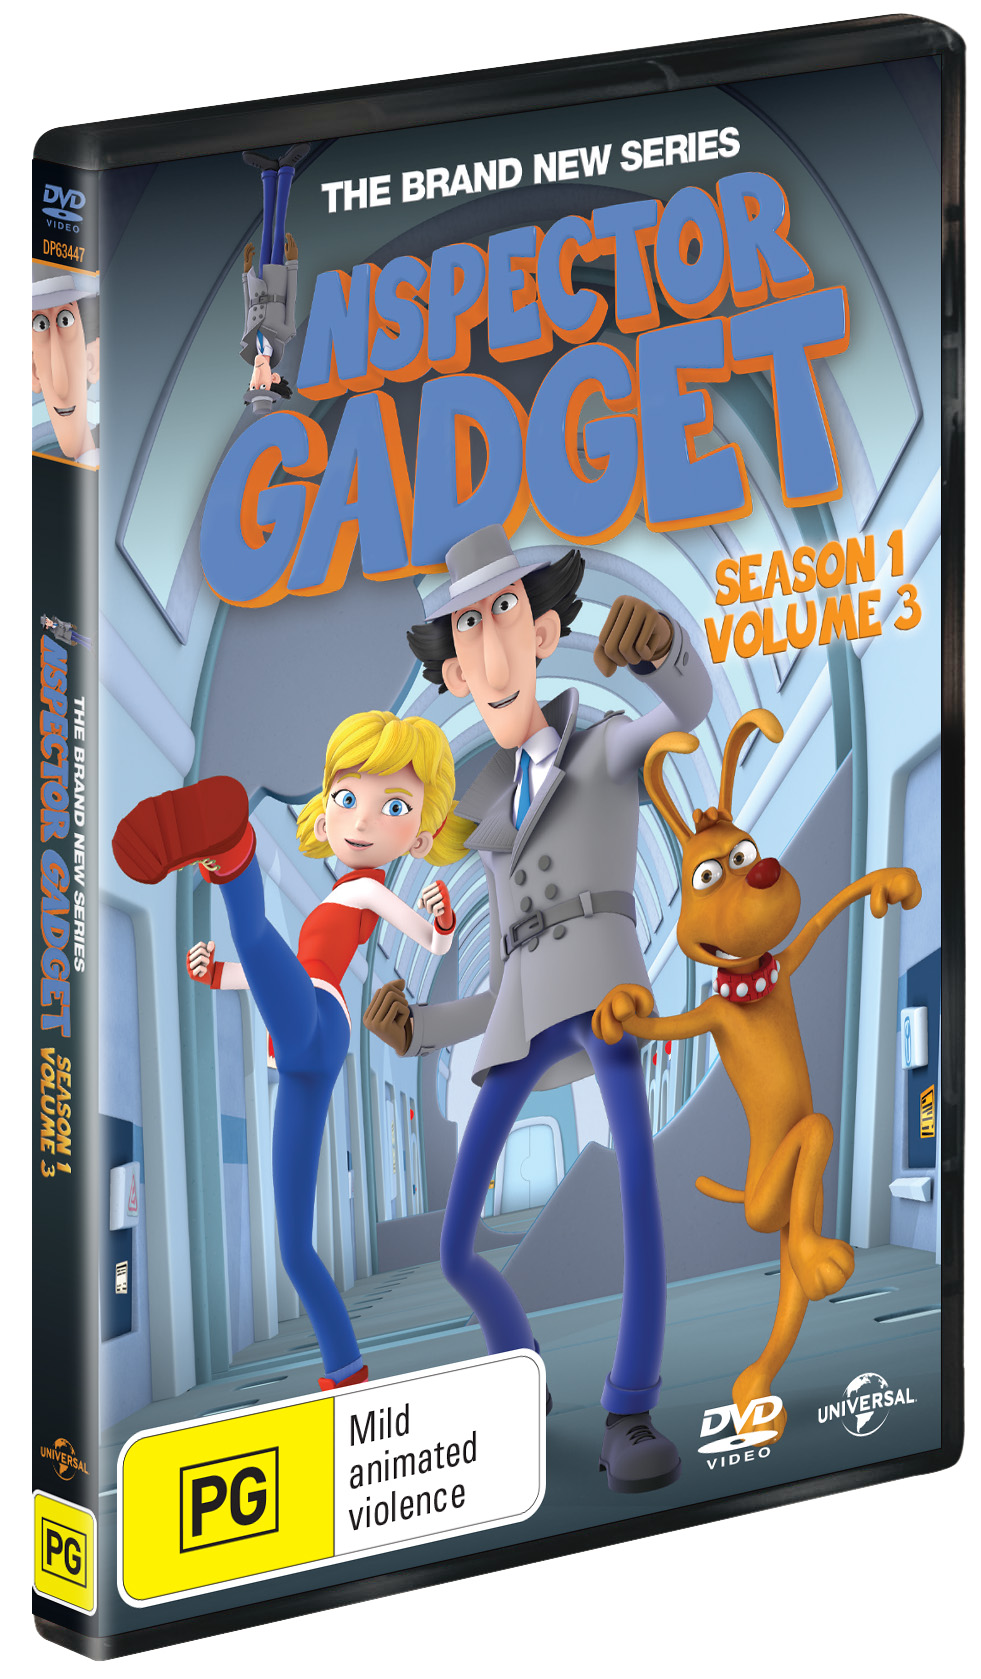 Win 1 of 10 'Inspector Gadget Season 1, Volume 3' DVD's - Mum's Lounge